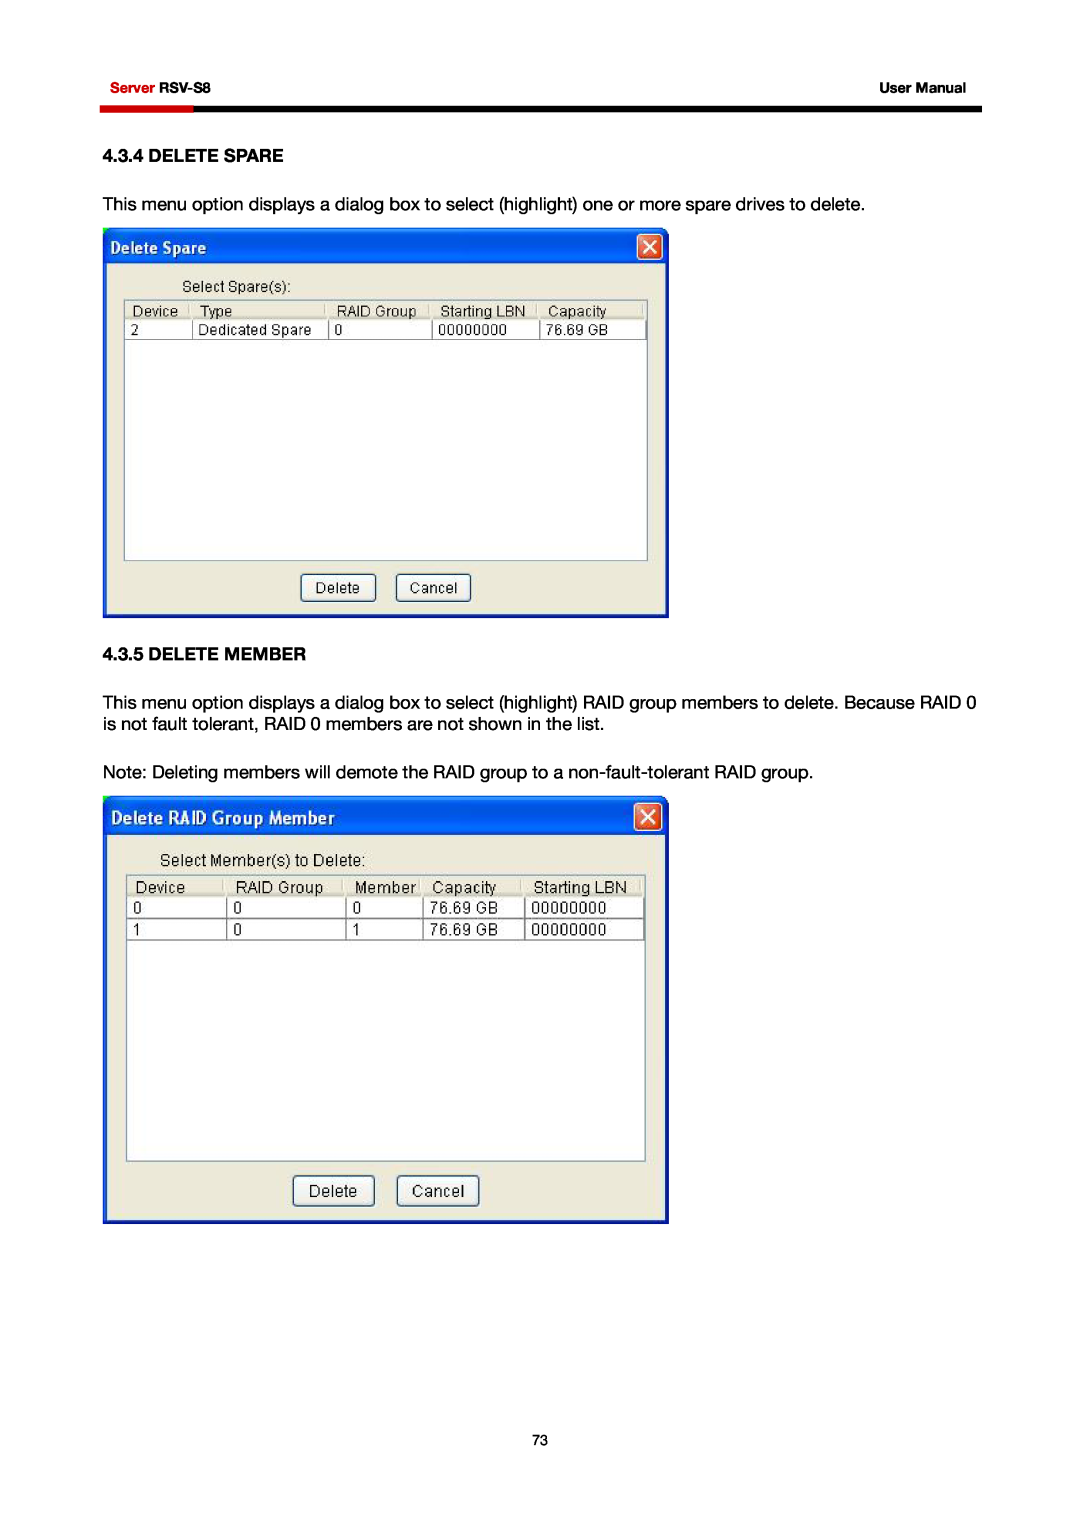 Rosewill RSV-S8 user manual Delete Spare, Delete Member 